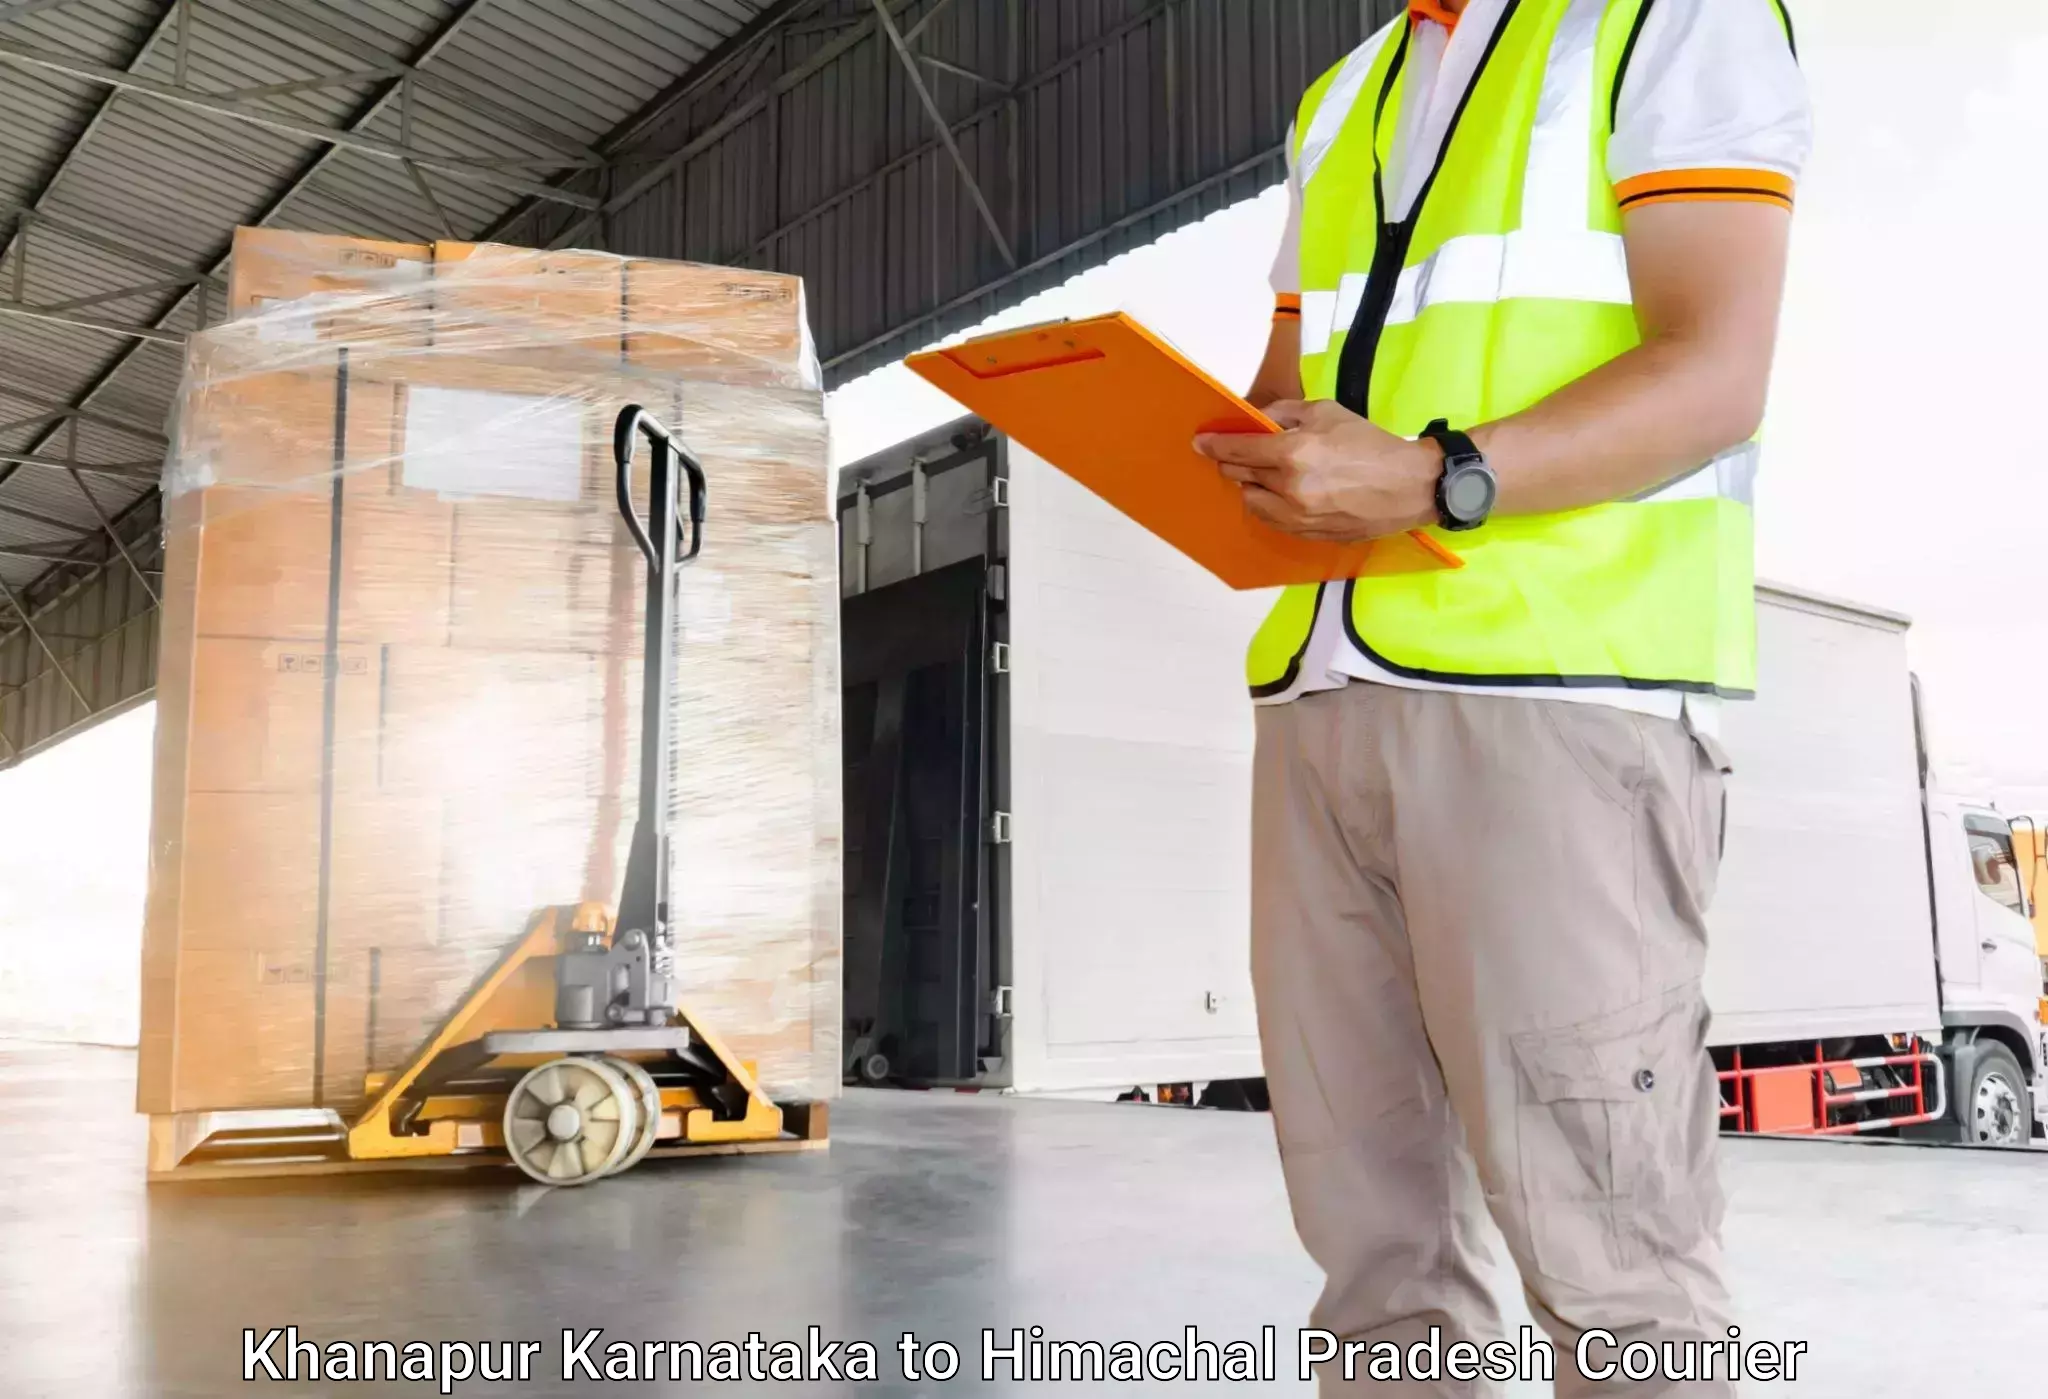 Emergency baggage service Khanapur Karnataka to Nirmand